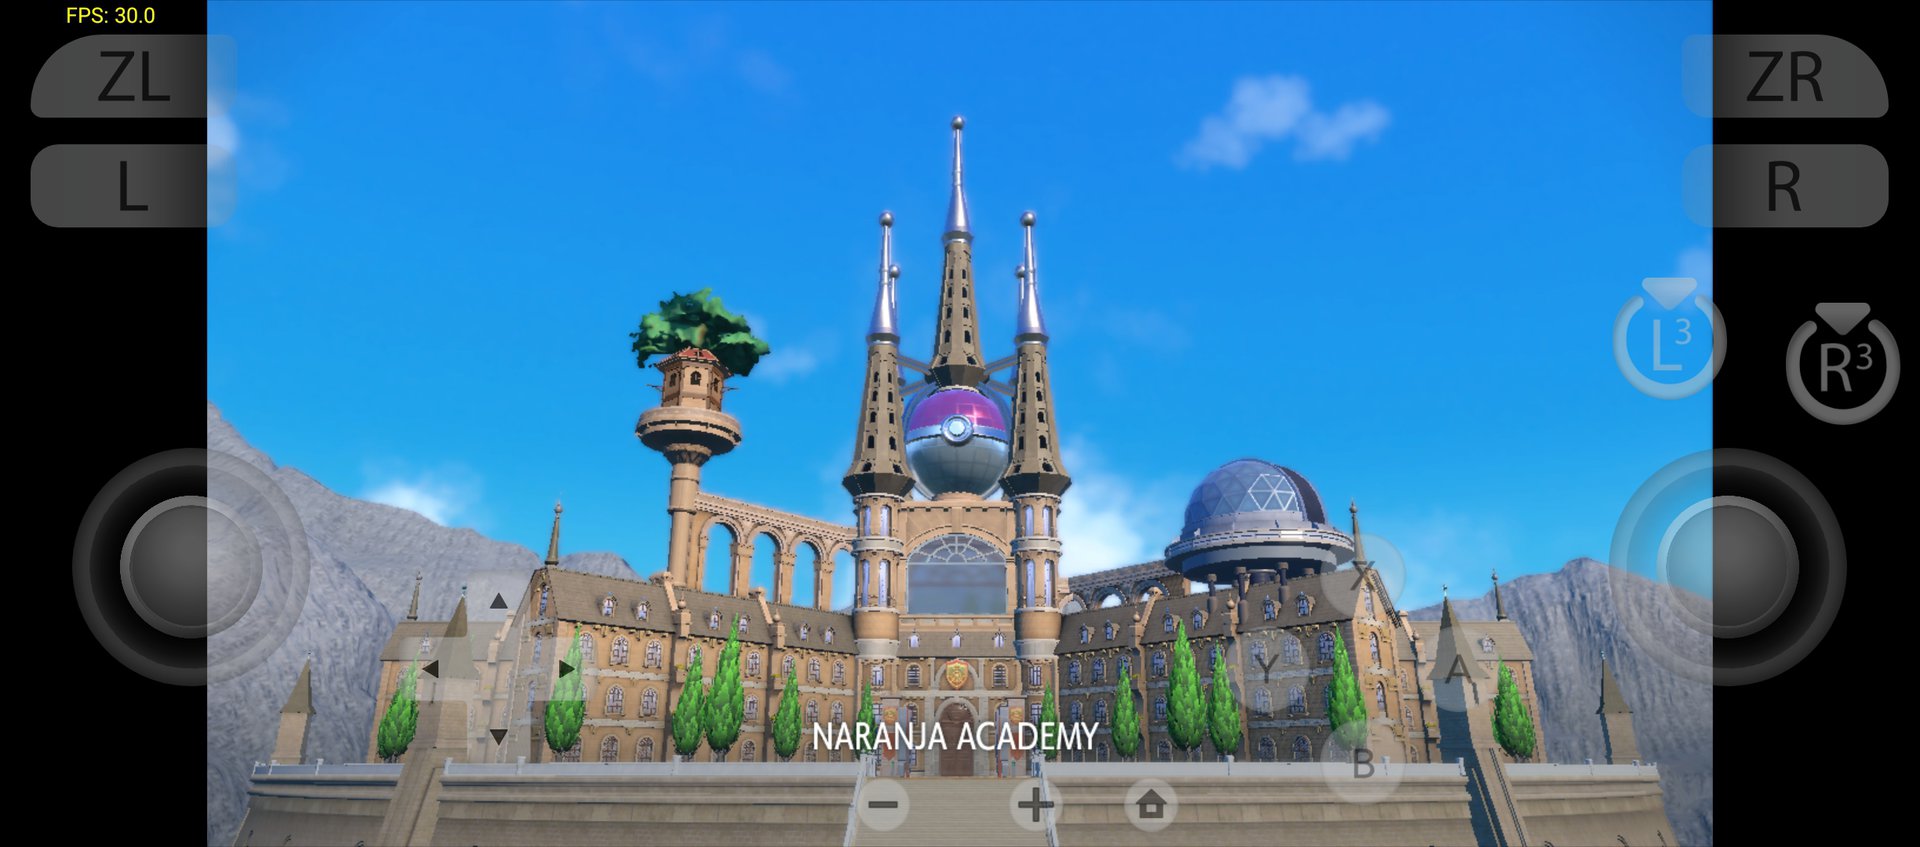 Yuzu emulator on Android Pokemon Scarlet Screenshot 1 9402